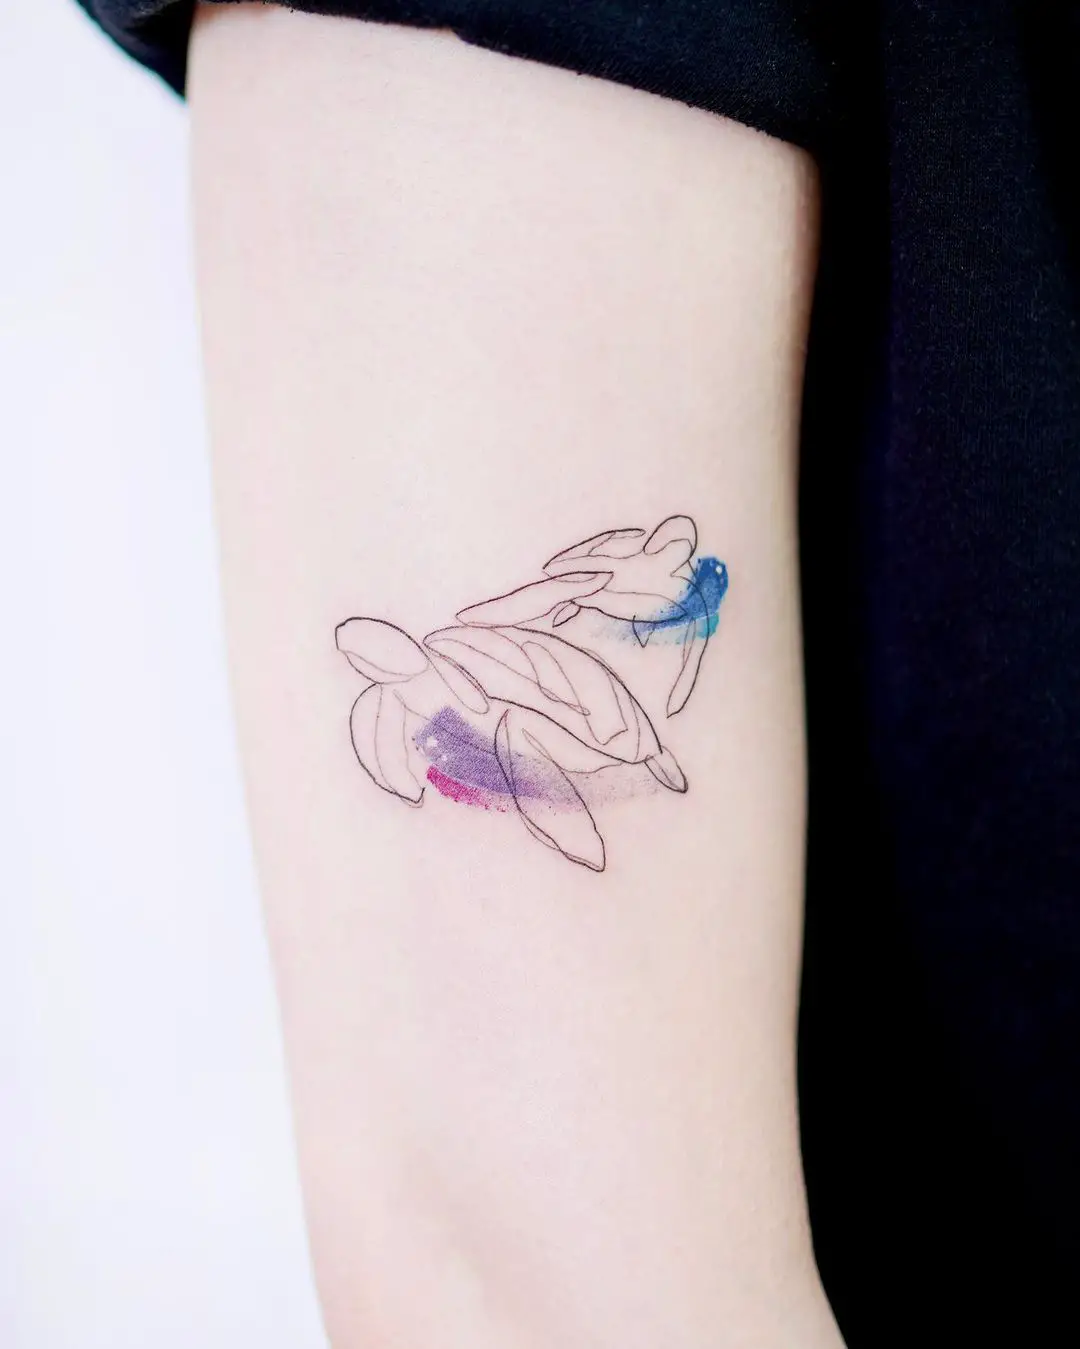 Turtle tattoo for women by imfine tat